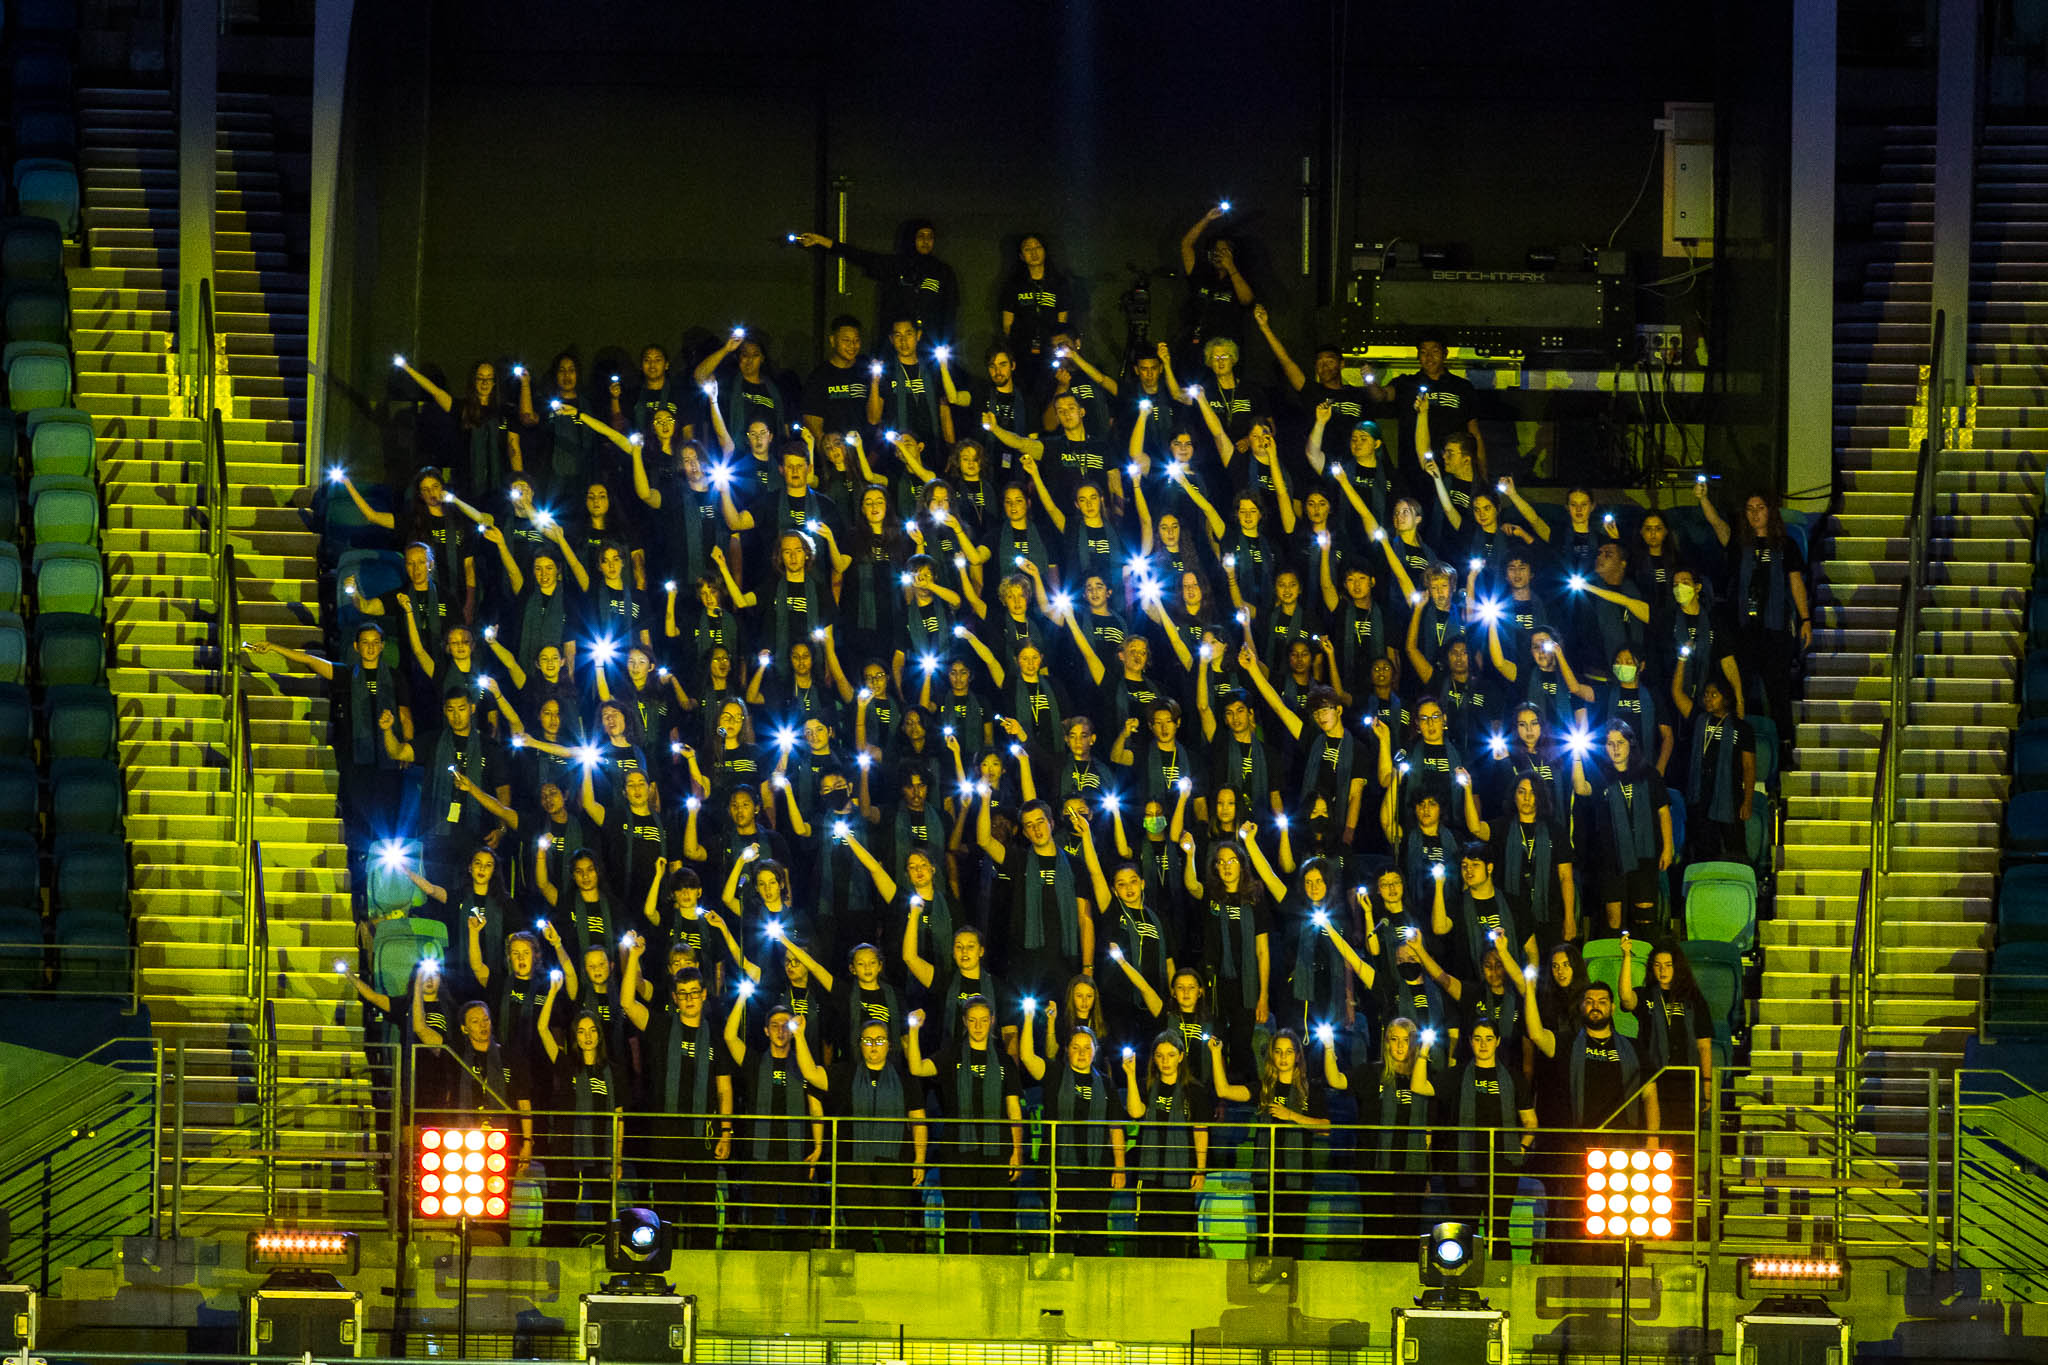 Massed choir in seating wearing black 